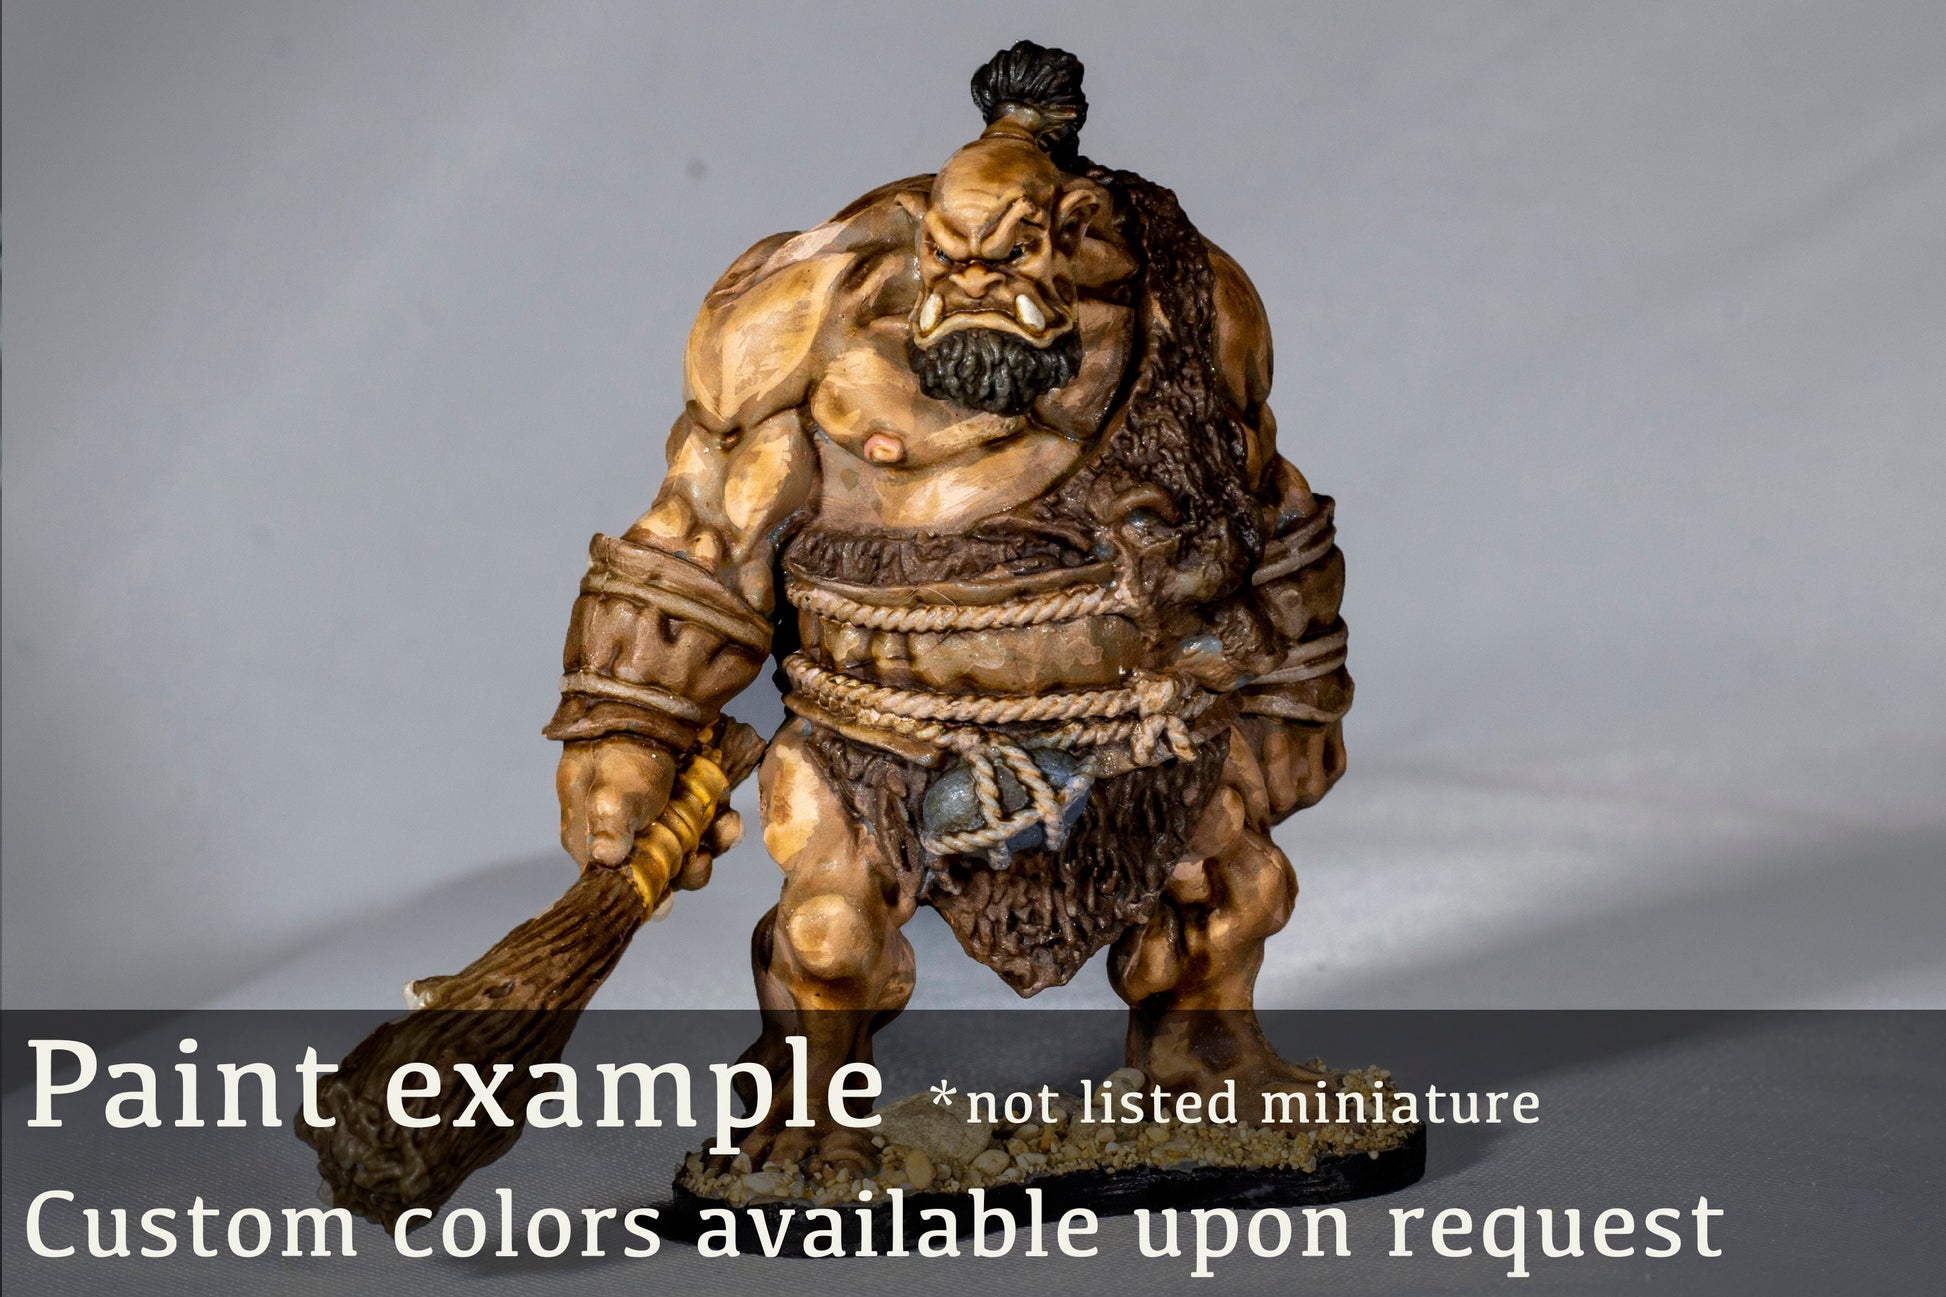 Spoguk, Orc Warlock Painted Model - Archvillain Games Printed Miniature | Dungeons & Dragons | Pathfinder | Tabletop